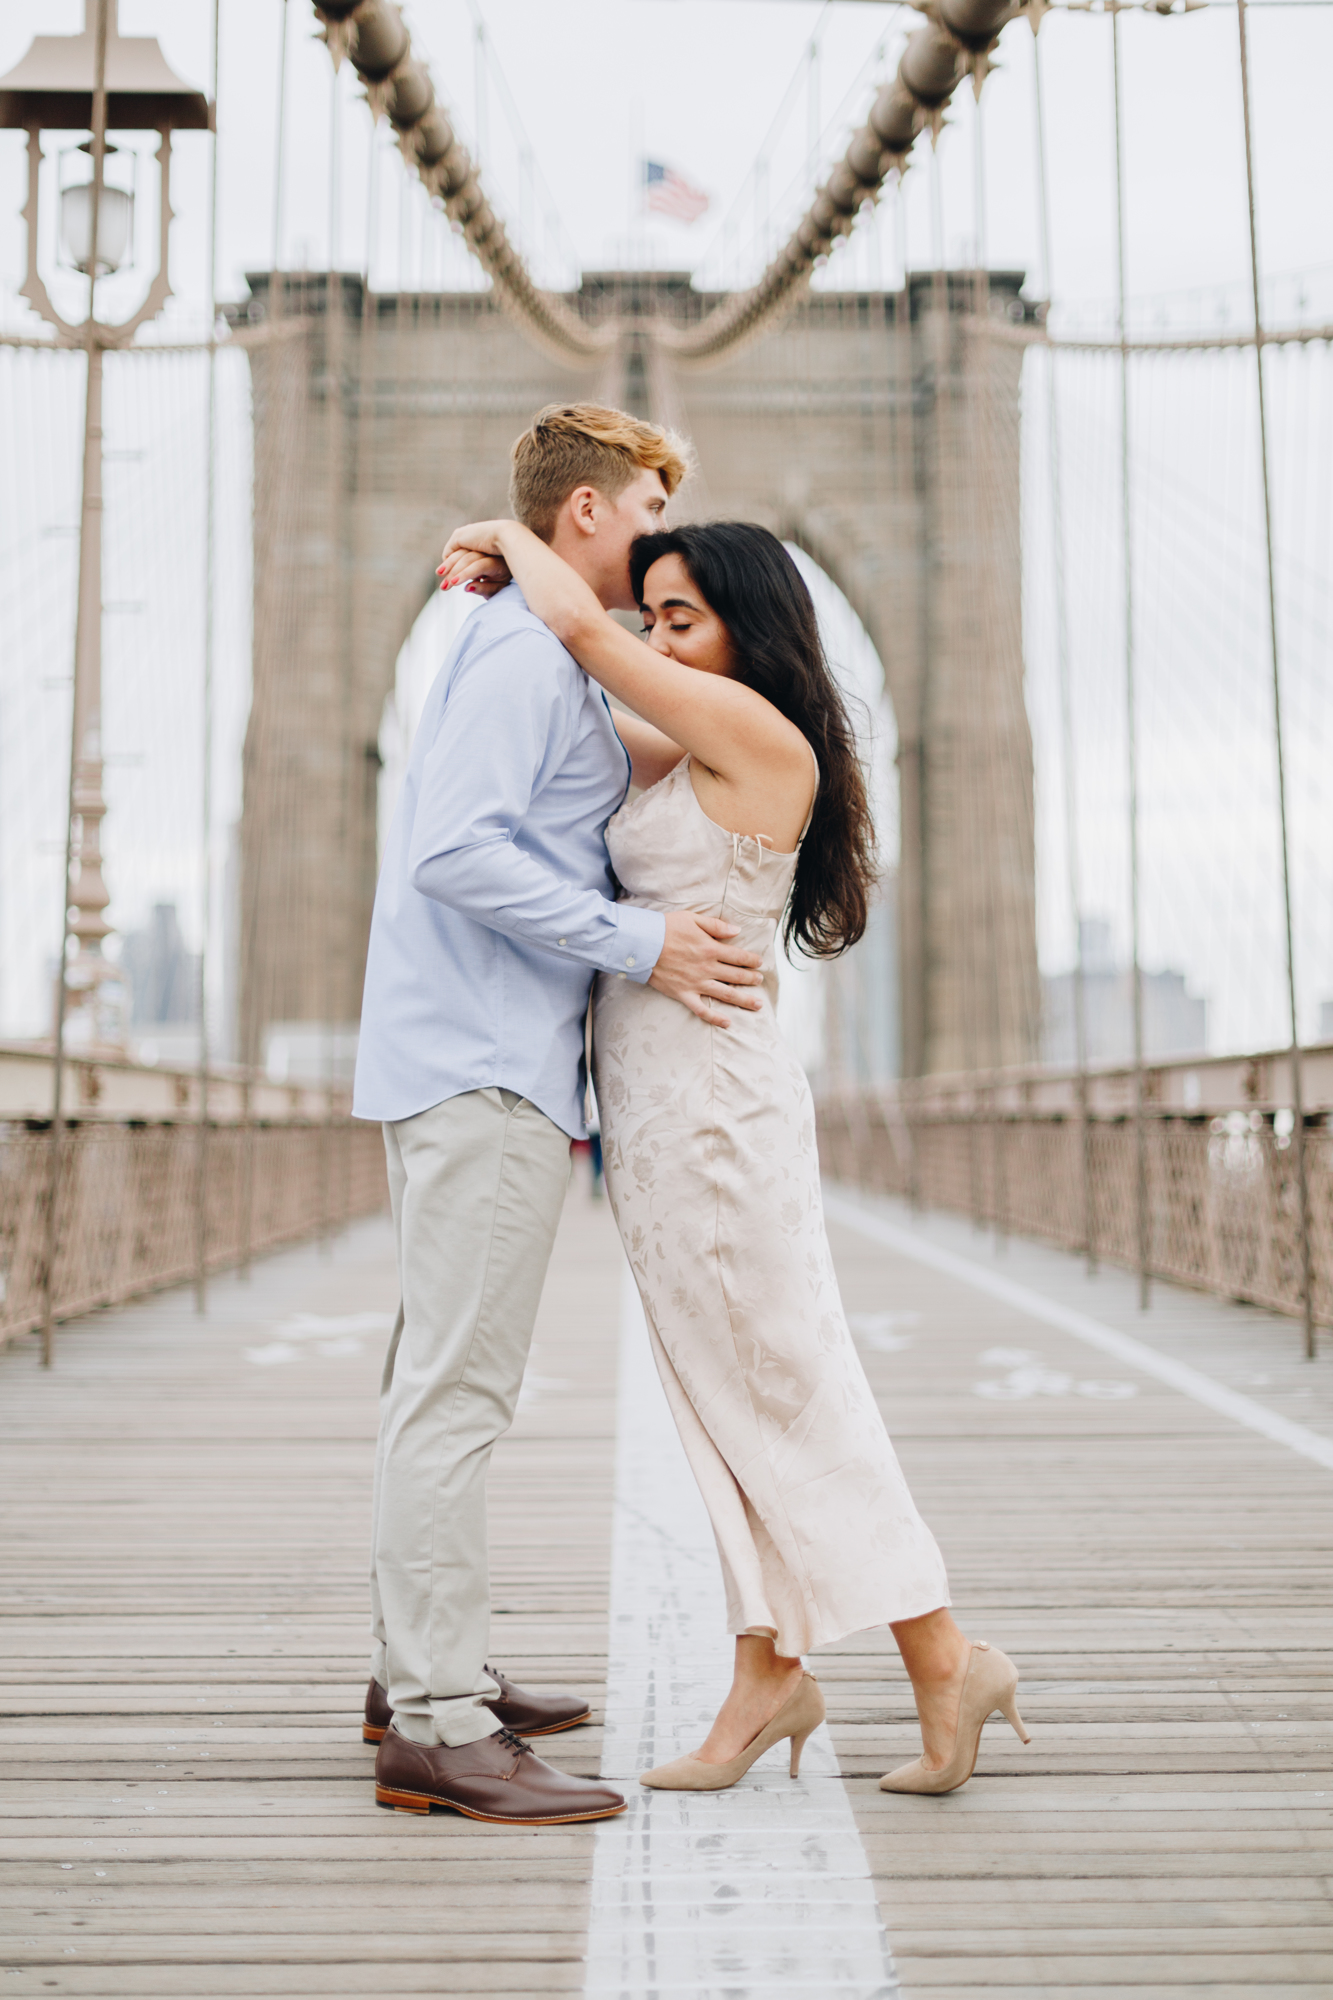 Wonderful Summertime Brooklyn Bridge Engagement Photos